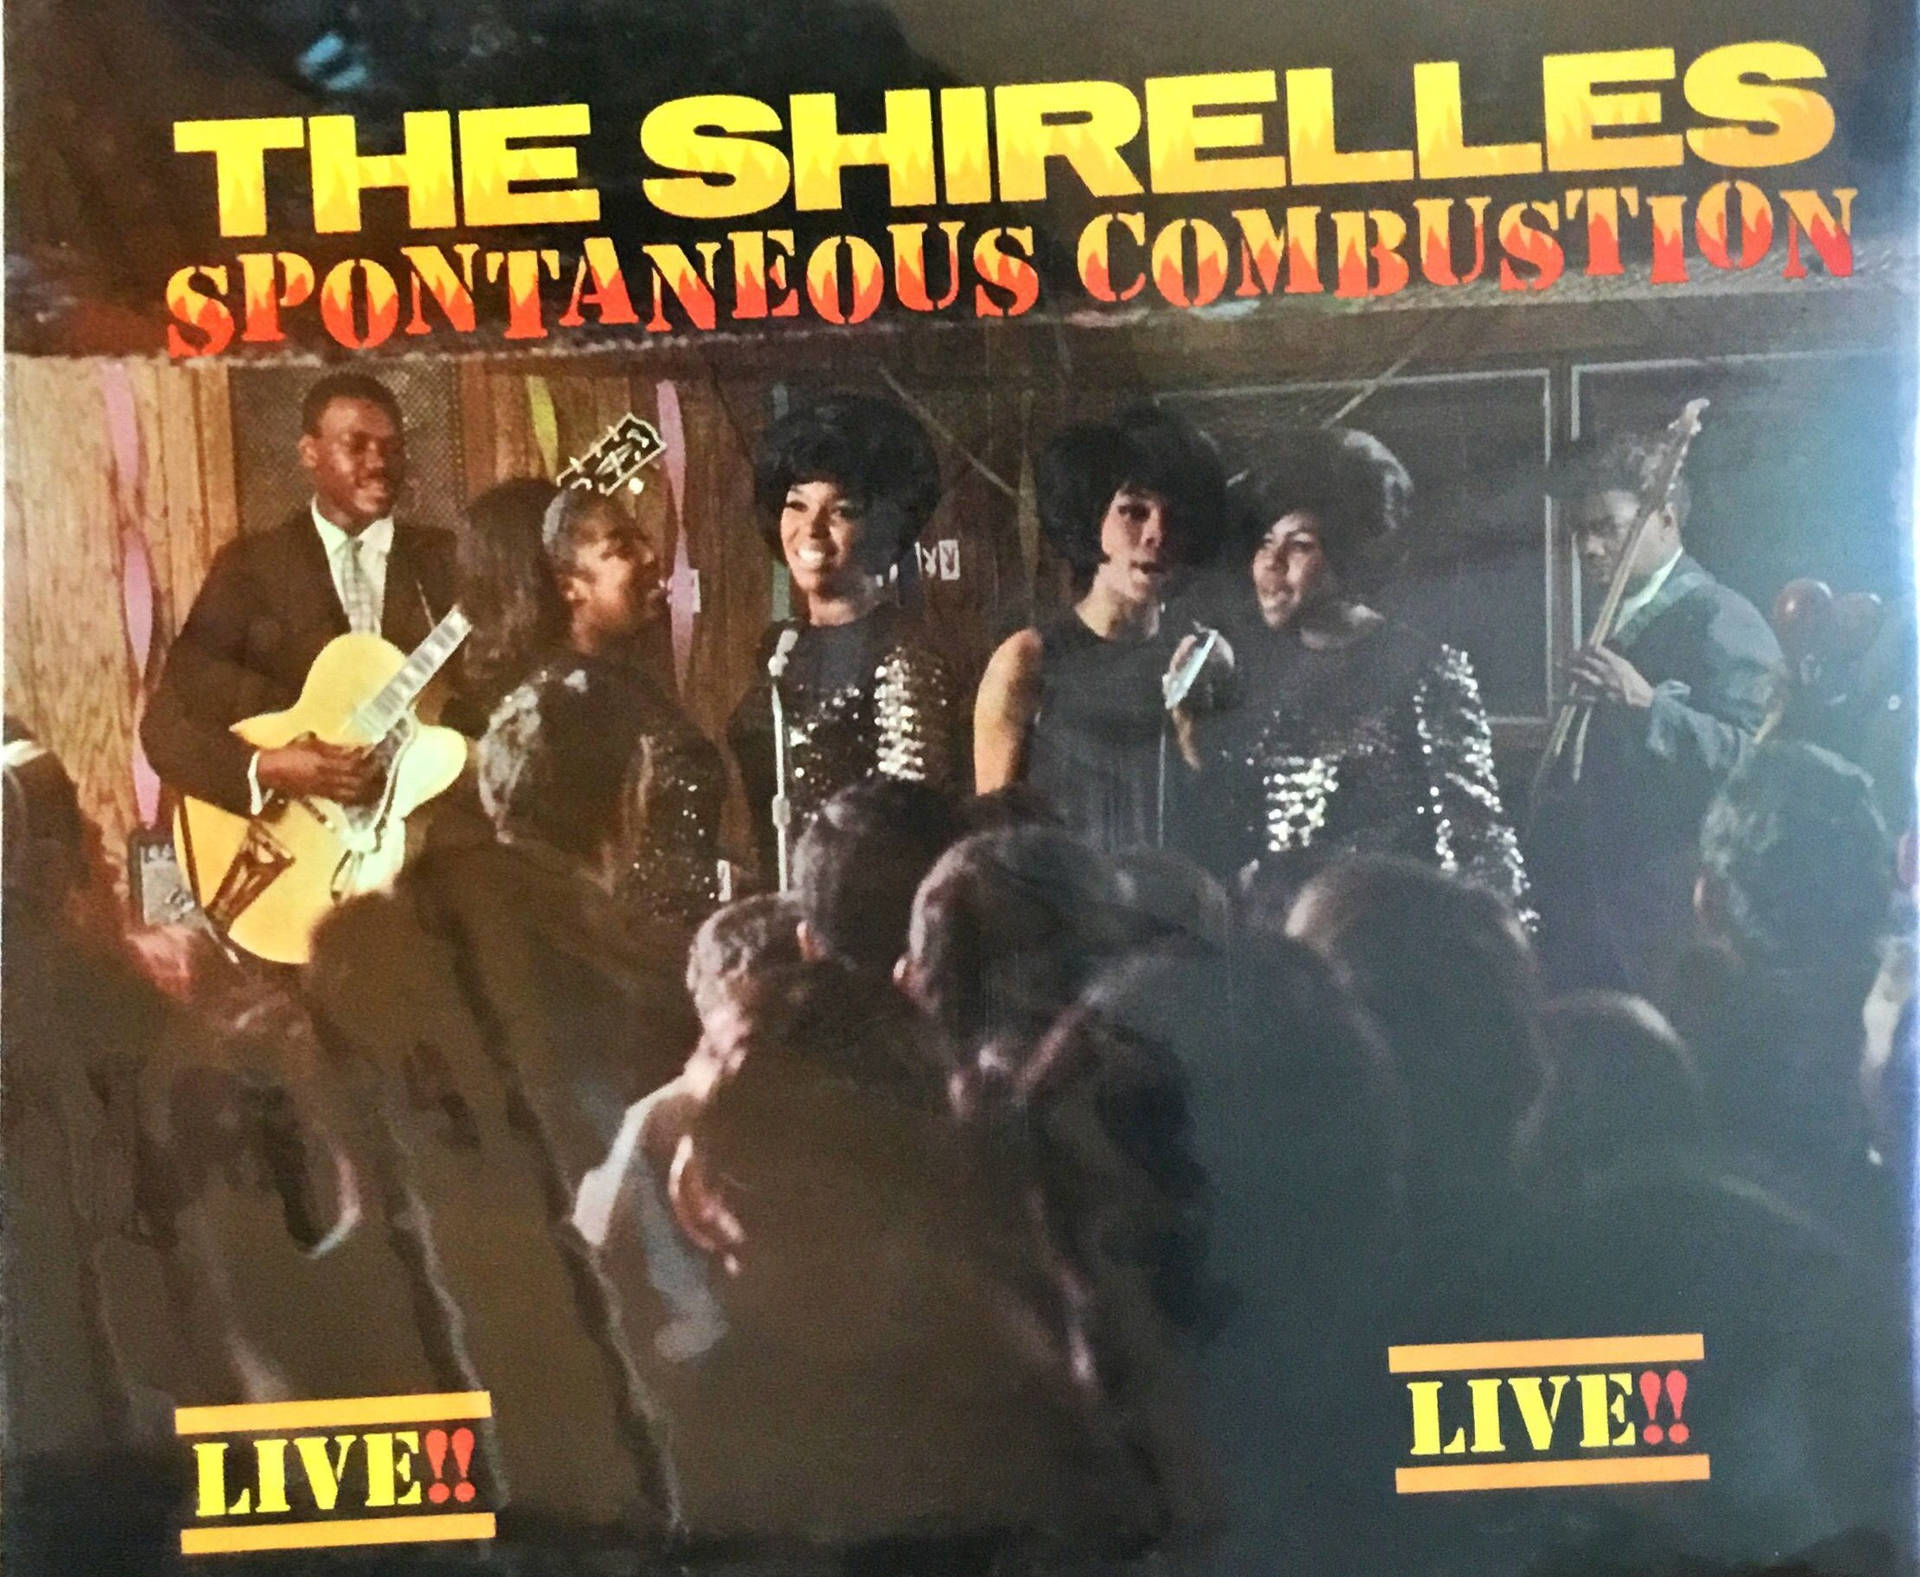 The Shirelles Spontaneous Combustion Album Cover Wallpaper